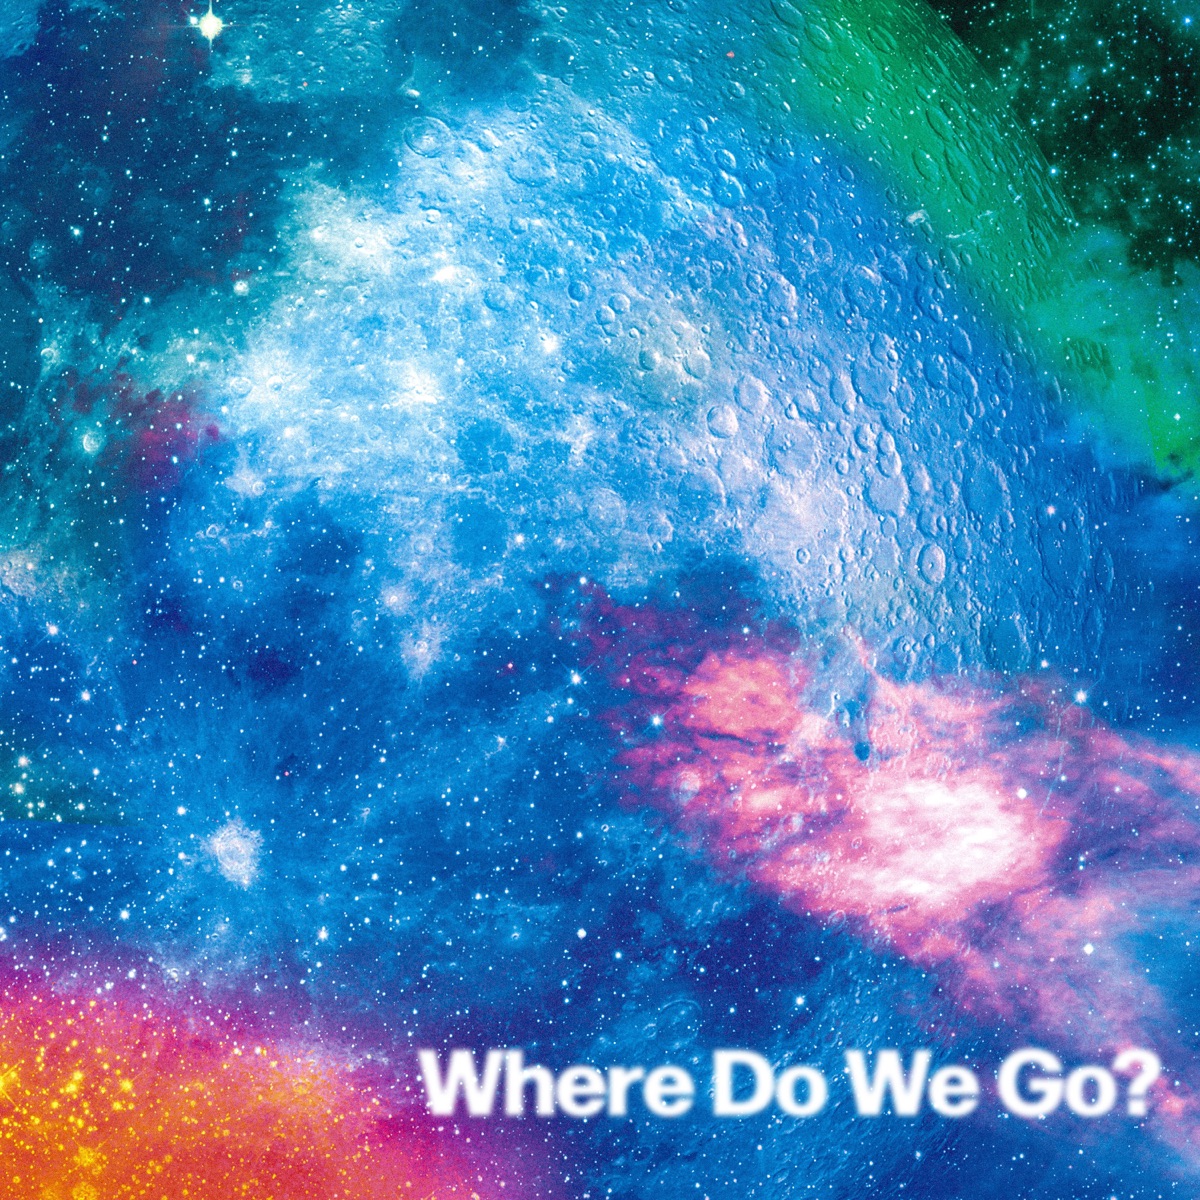 Cover art for『OKAMOTO'S - Where Do We Go?』from the release『Where Do We Go?